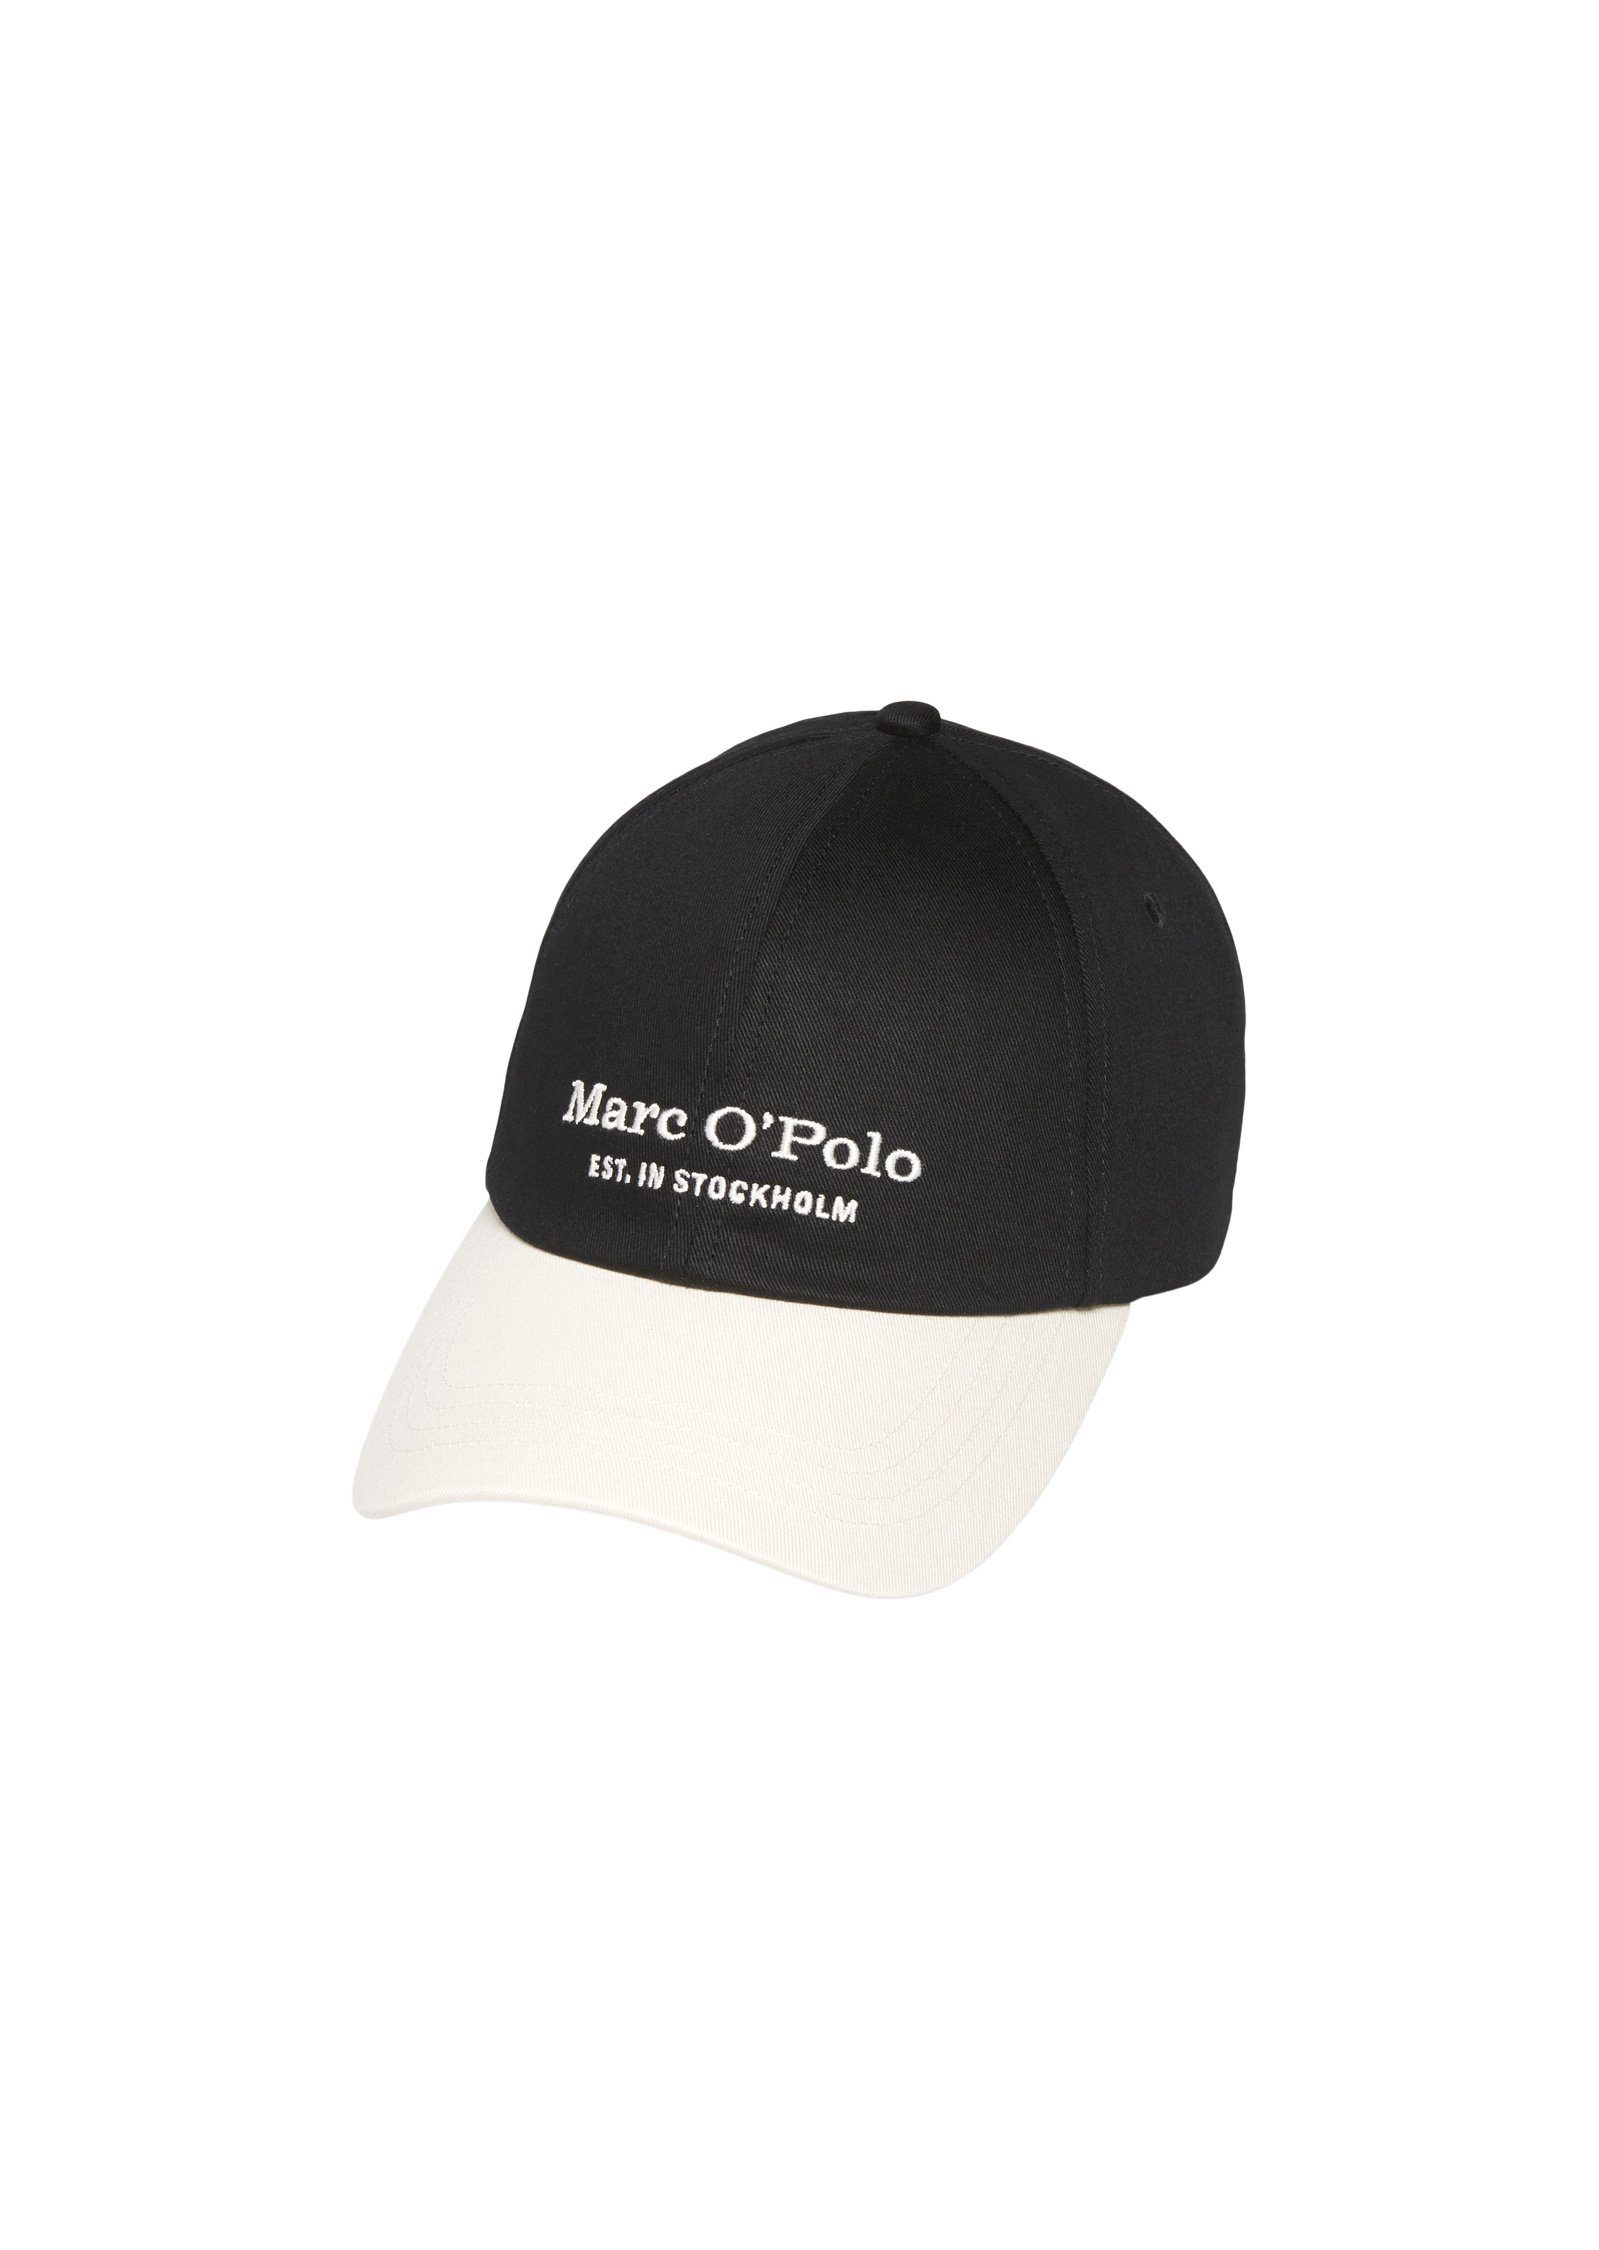 Marc O'Polo Baseball Cap aus reinem Organic Cotton, One size fits all,  verstellbar